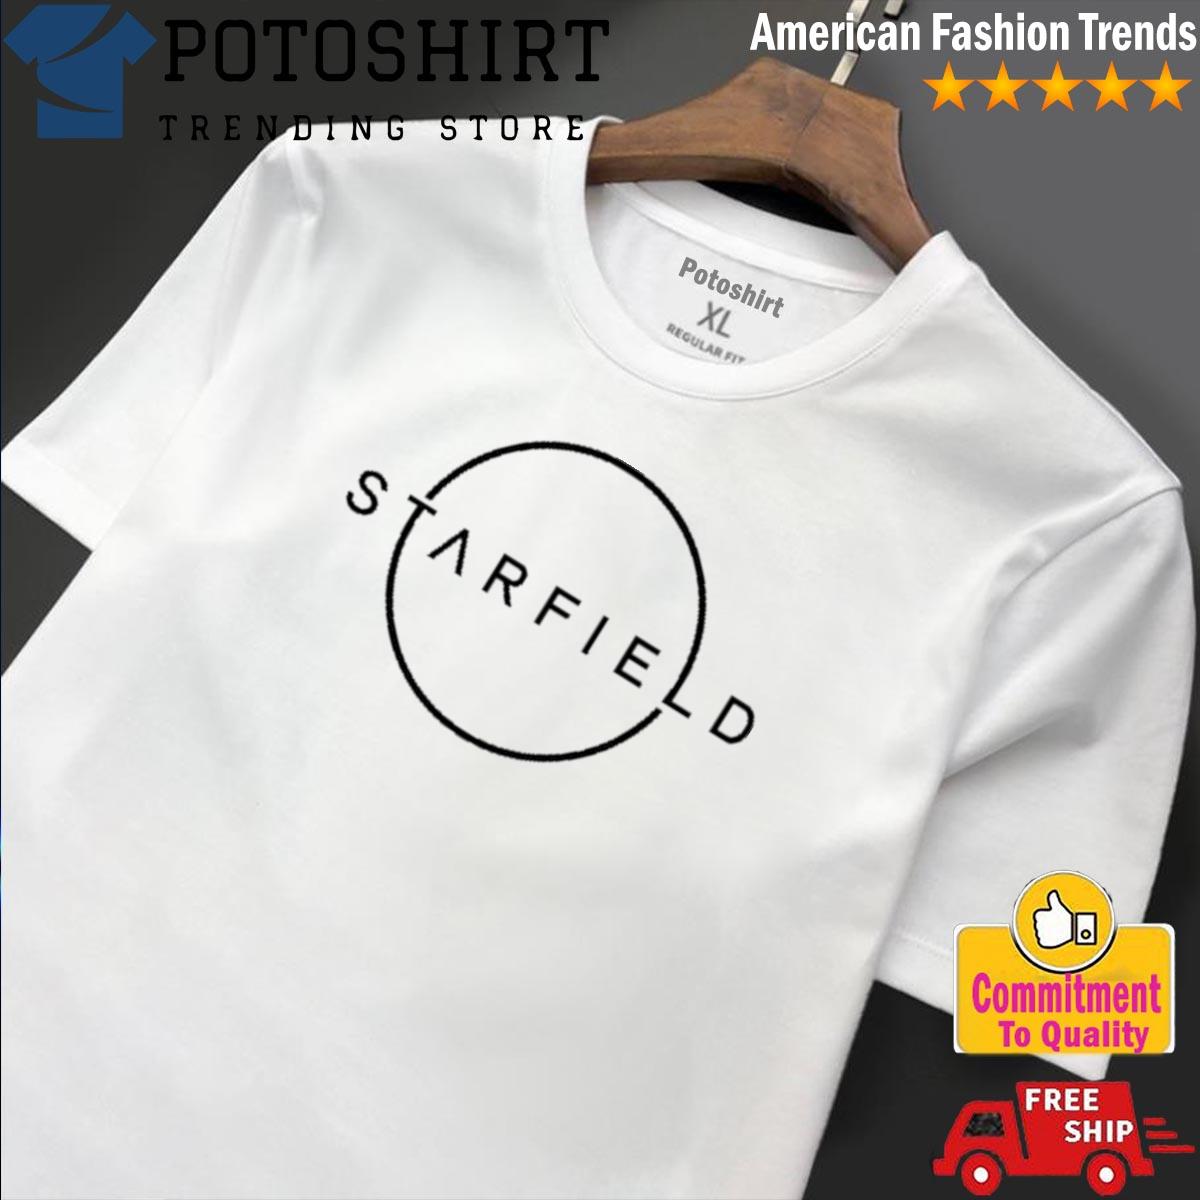 Product starfield Logo new 2023 shirt, hoodie, sweater, long